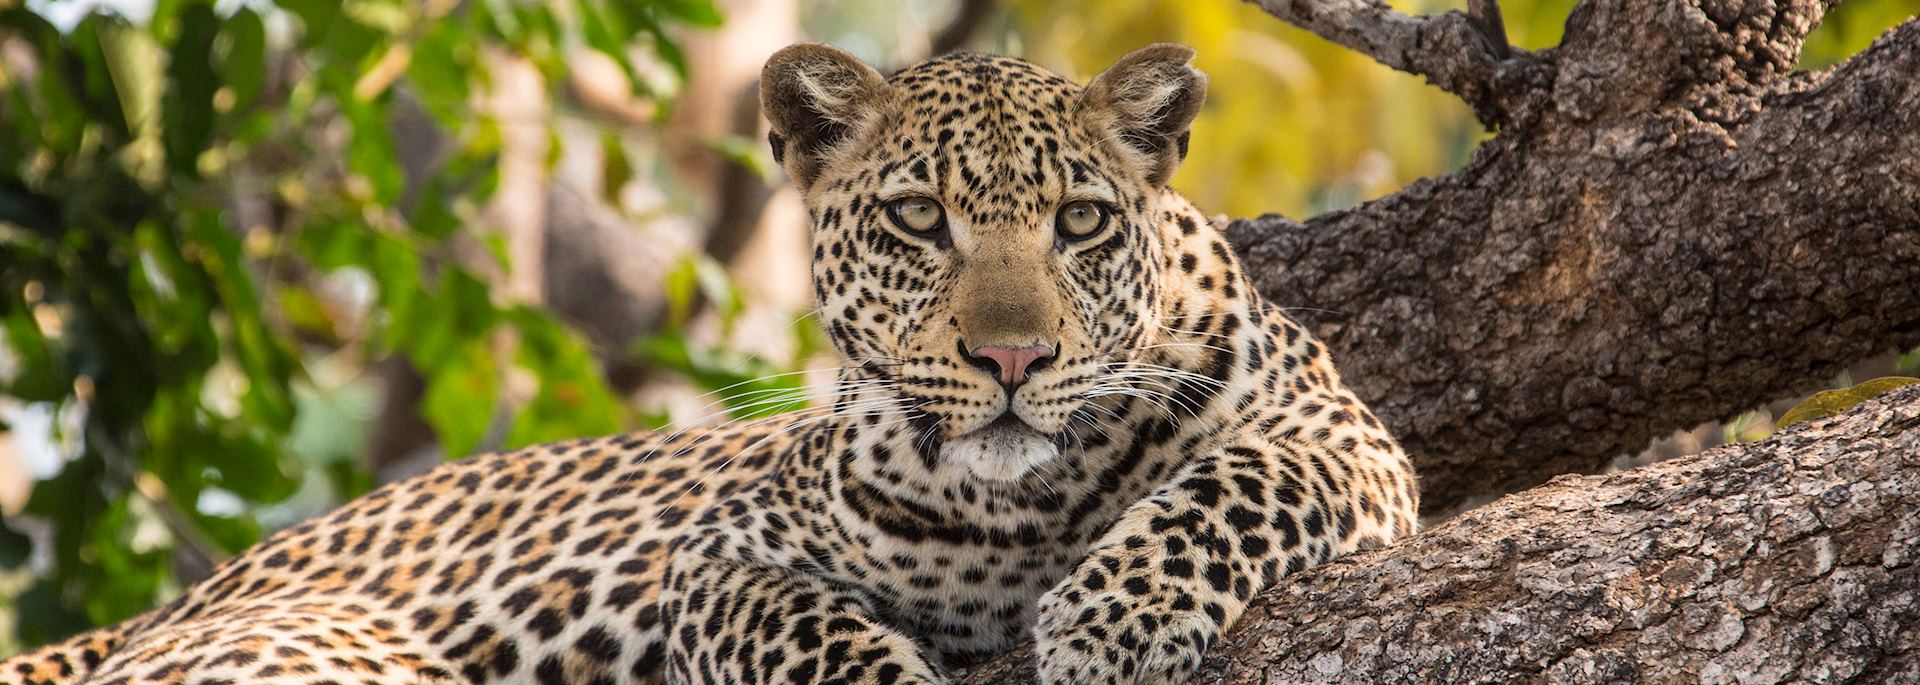 Leopard in Tanzania's Serengeti National Park